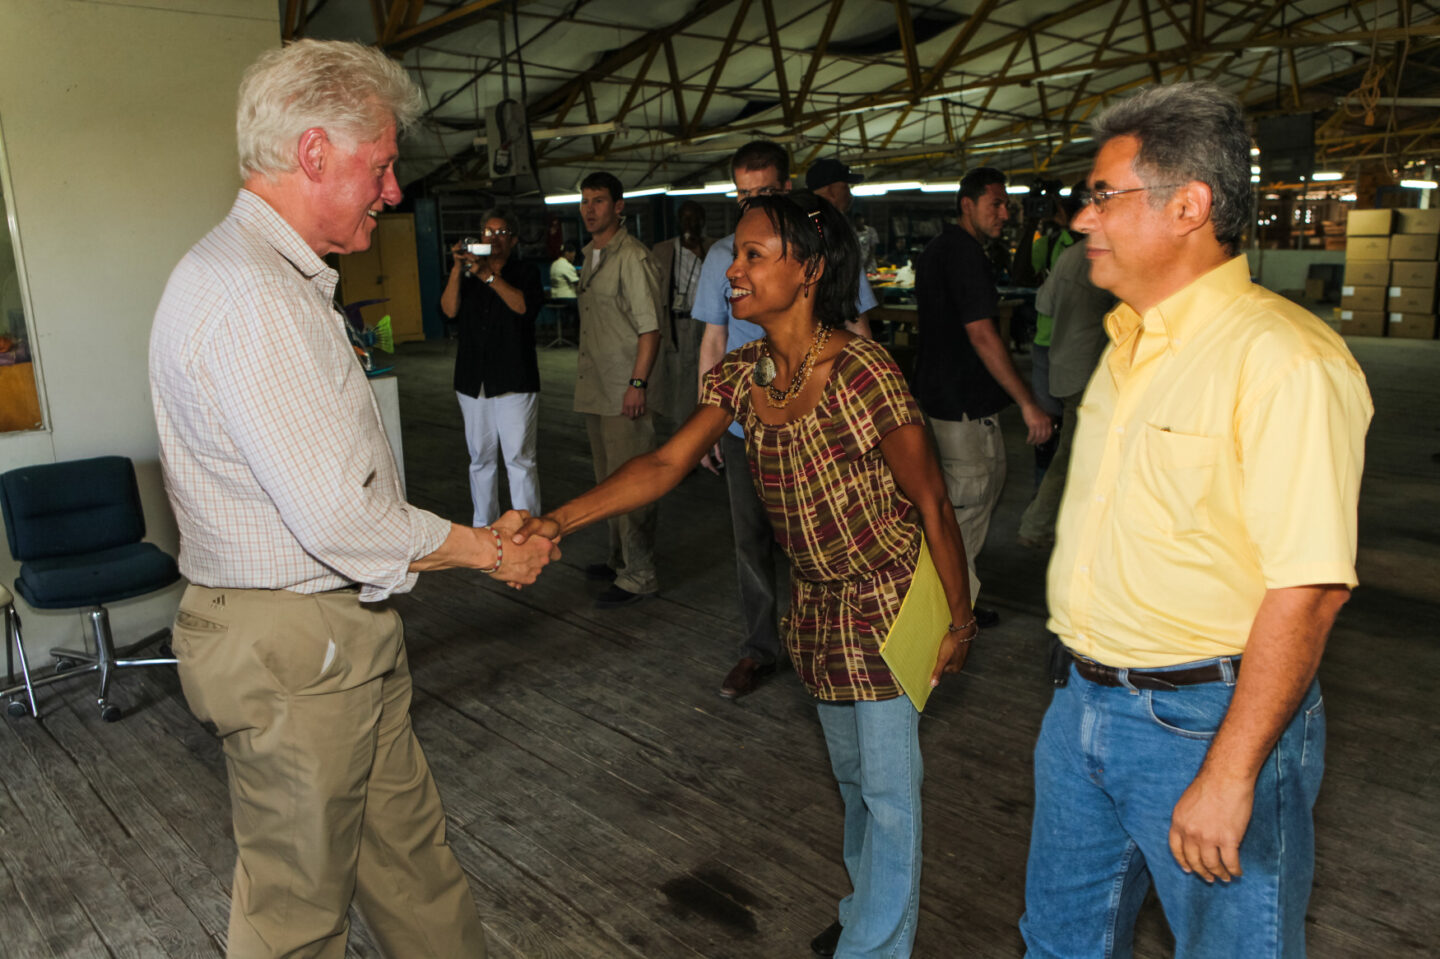 President Clinton shakes an individual's hand